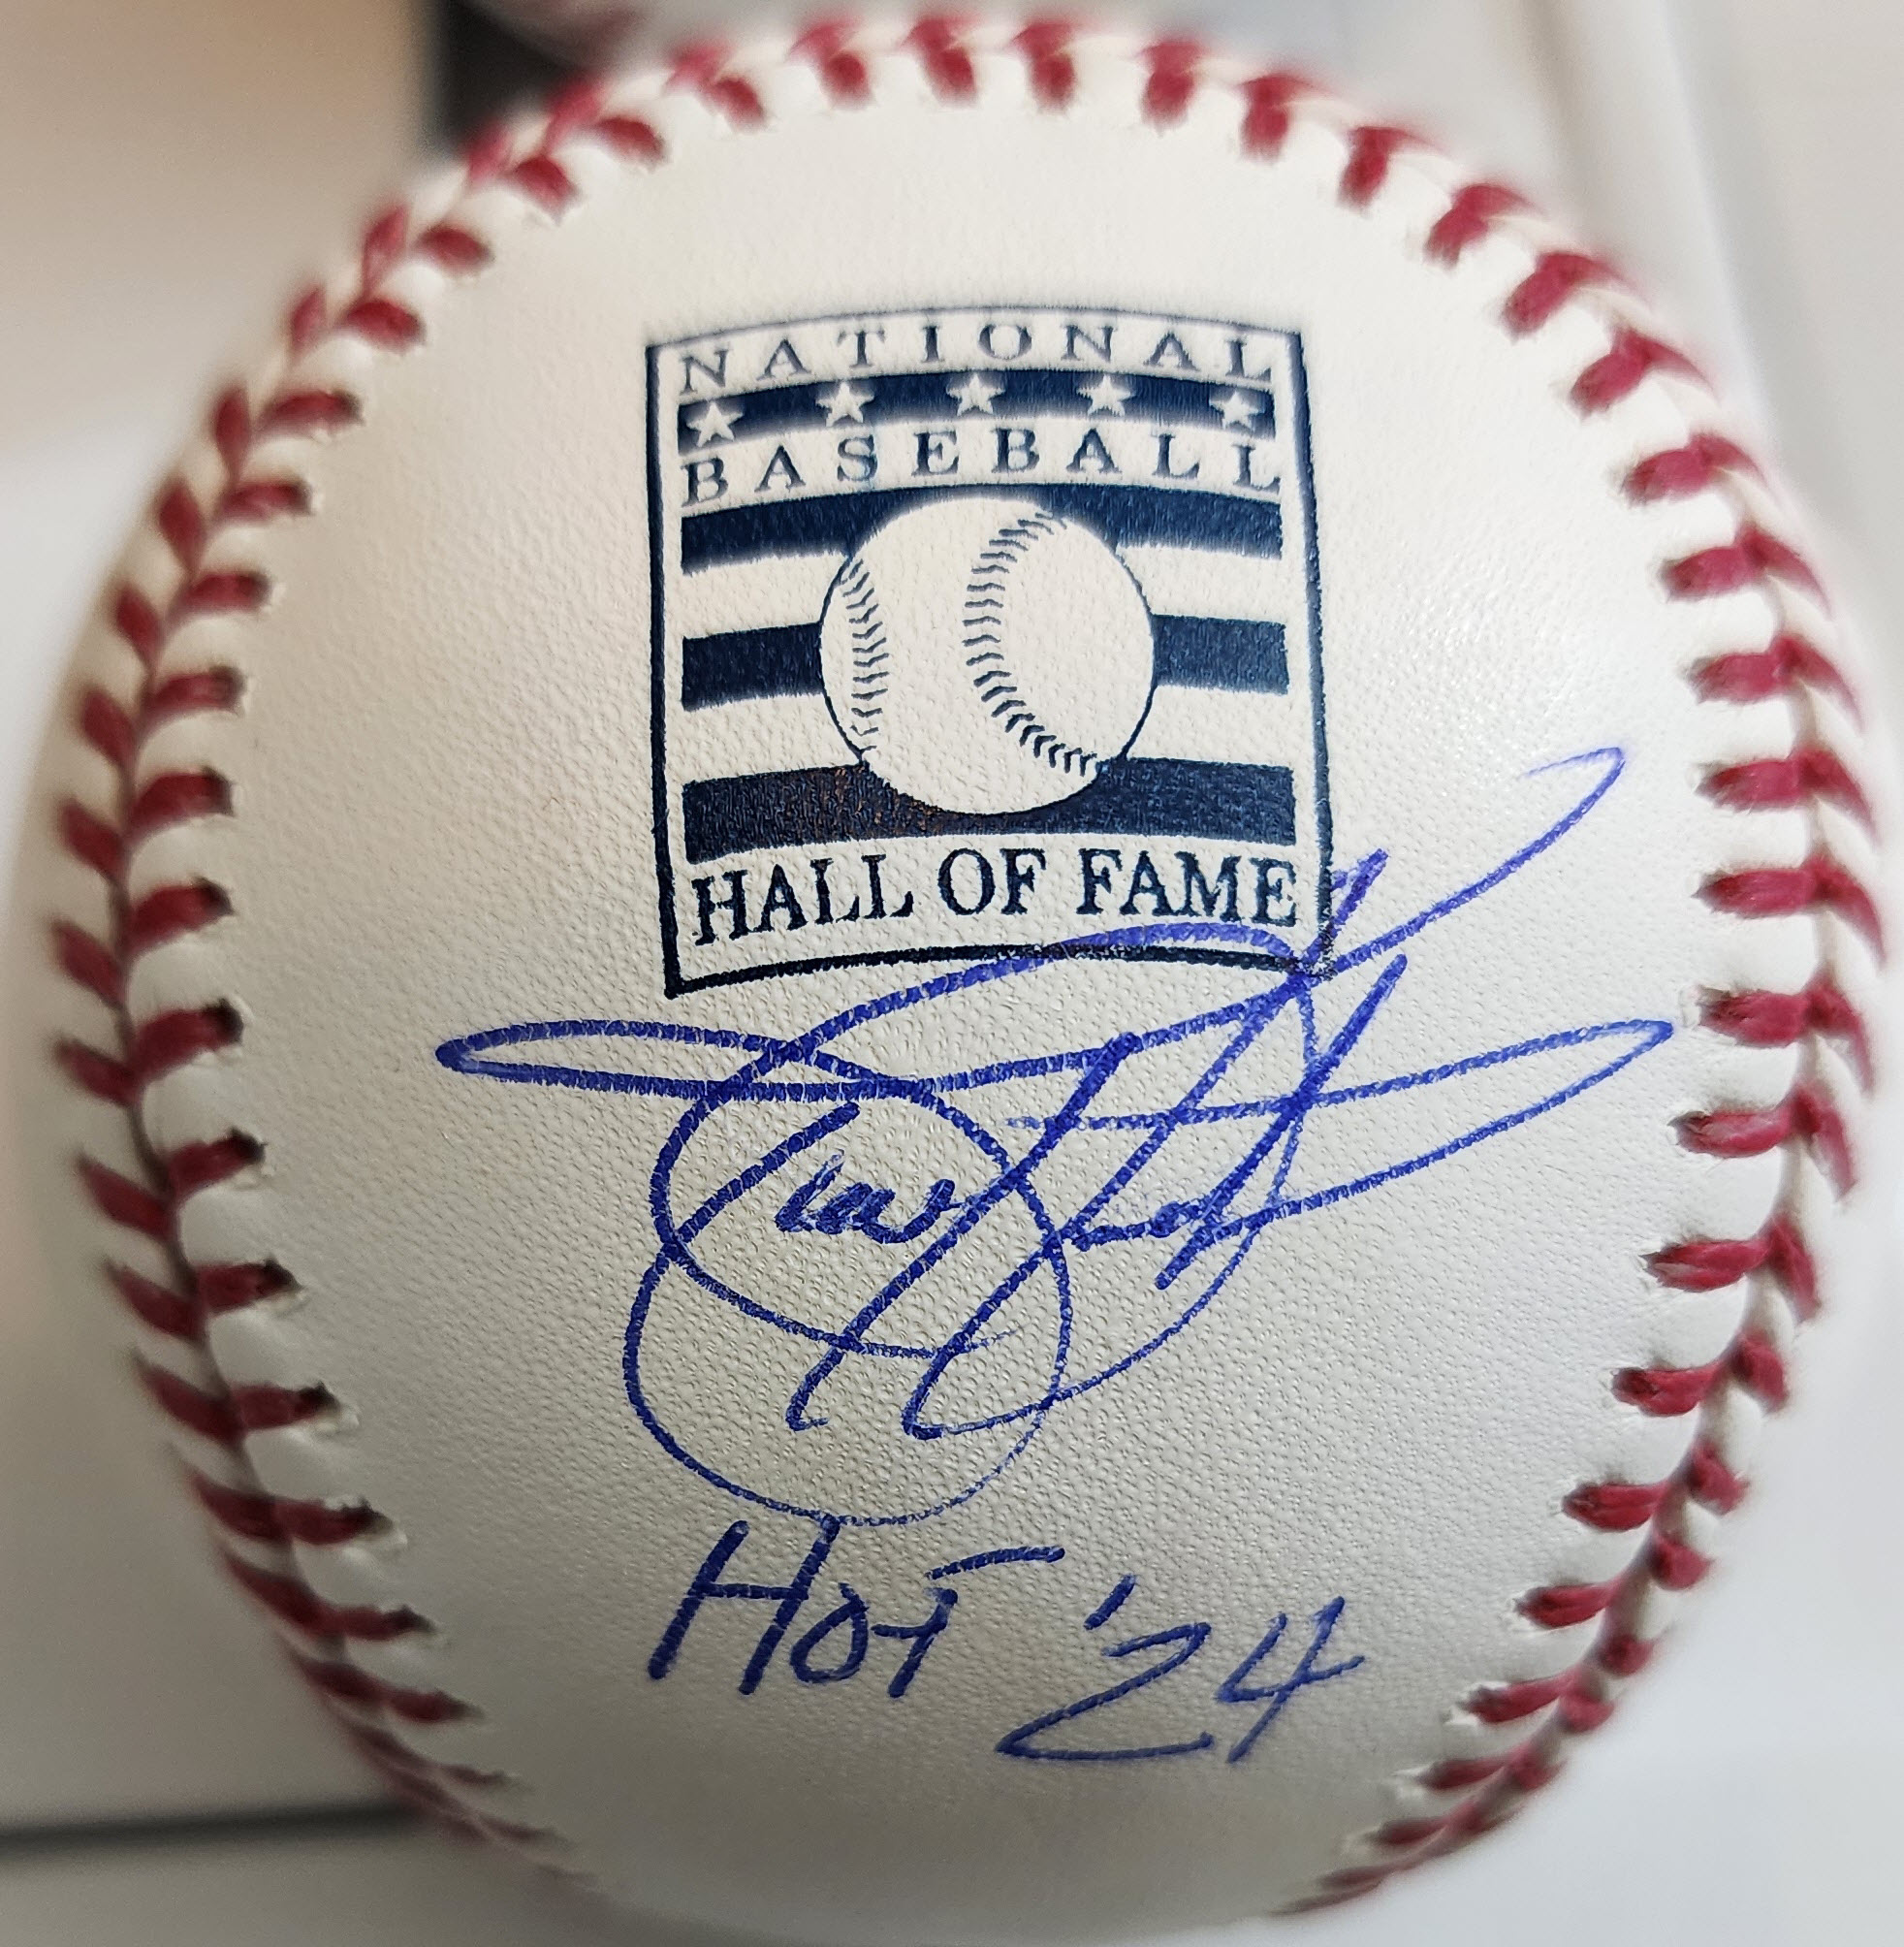 Todd Helton Autographed HOF Baseball Side w HOF24 Inscription